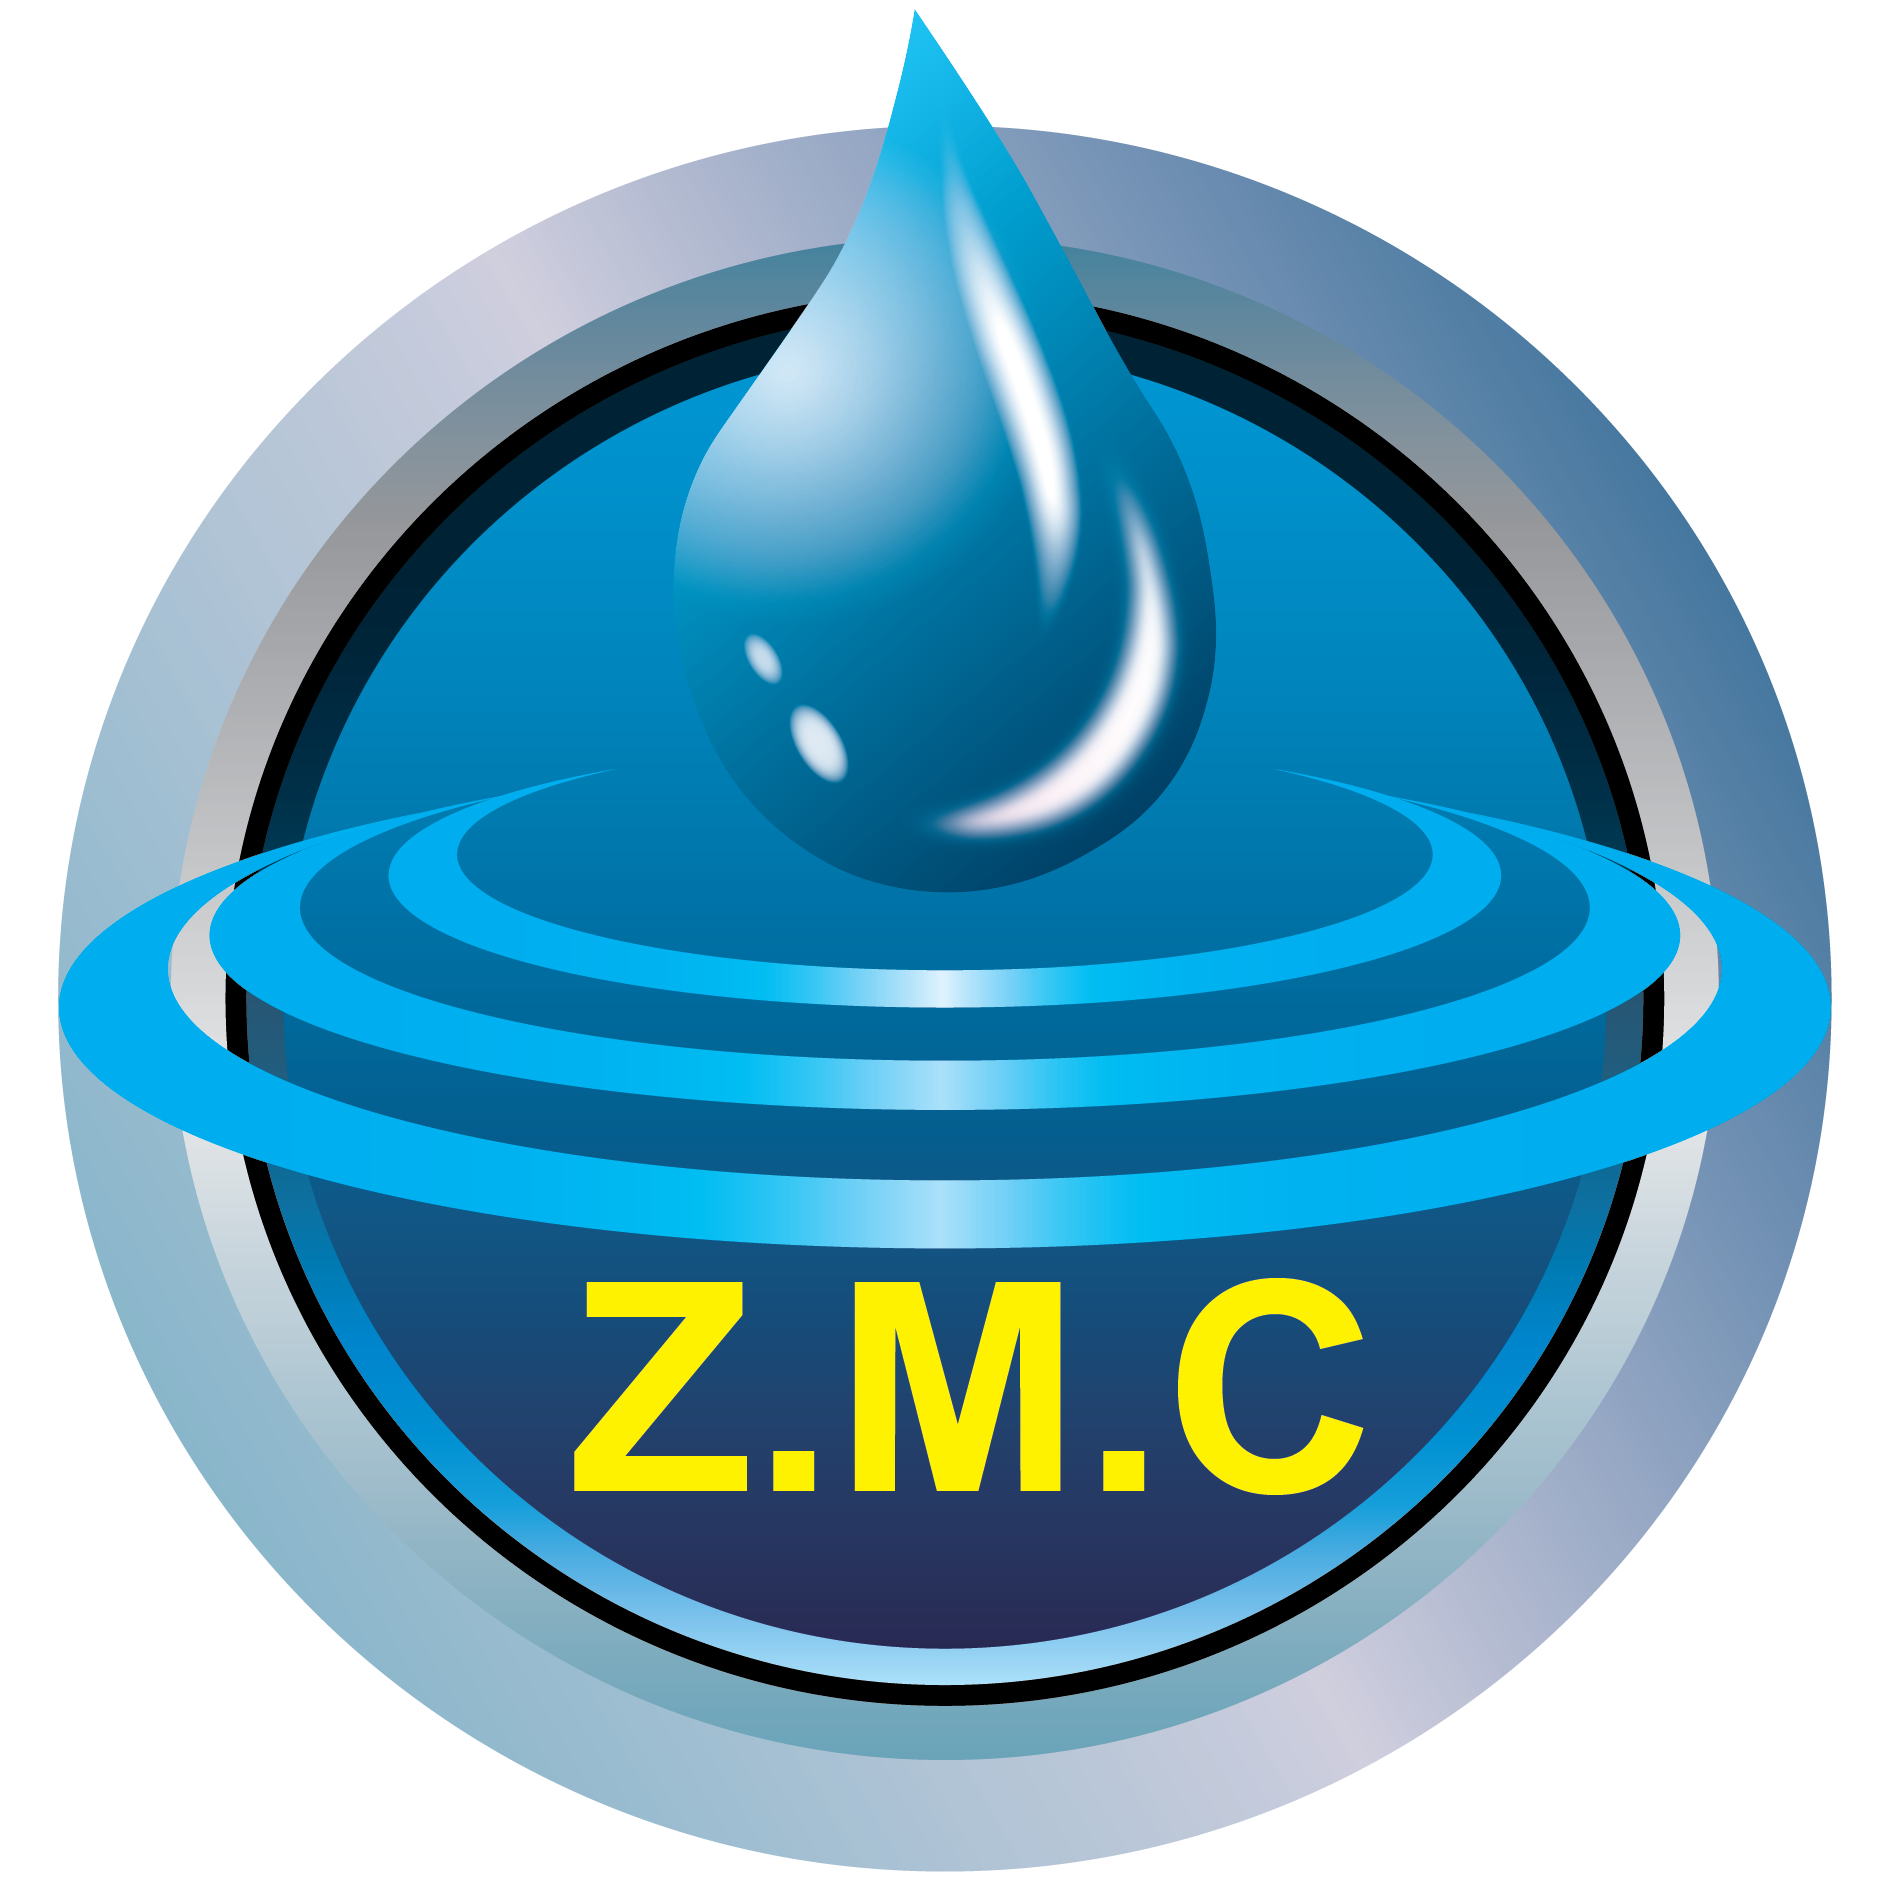 Zalal Mowafaq Non-Alcoholic Drinks and Mineral Water Company